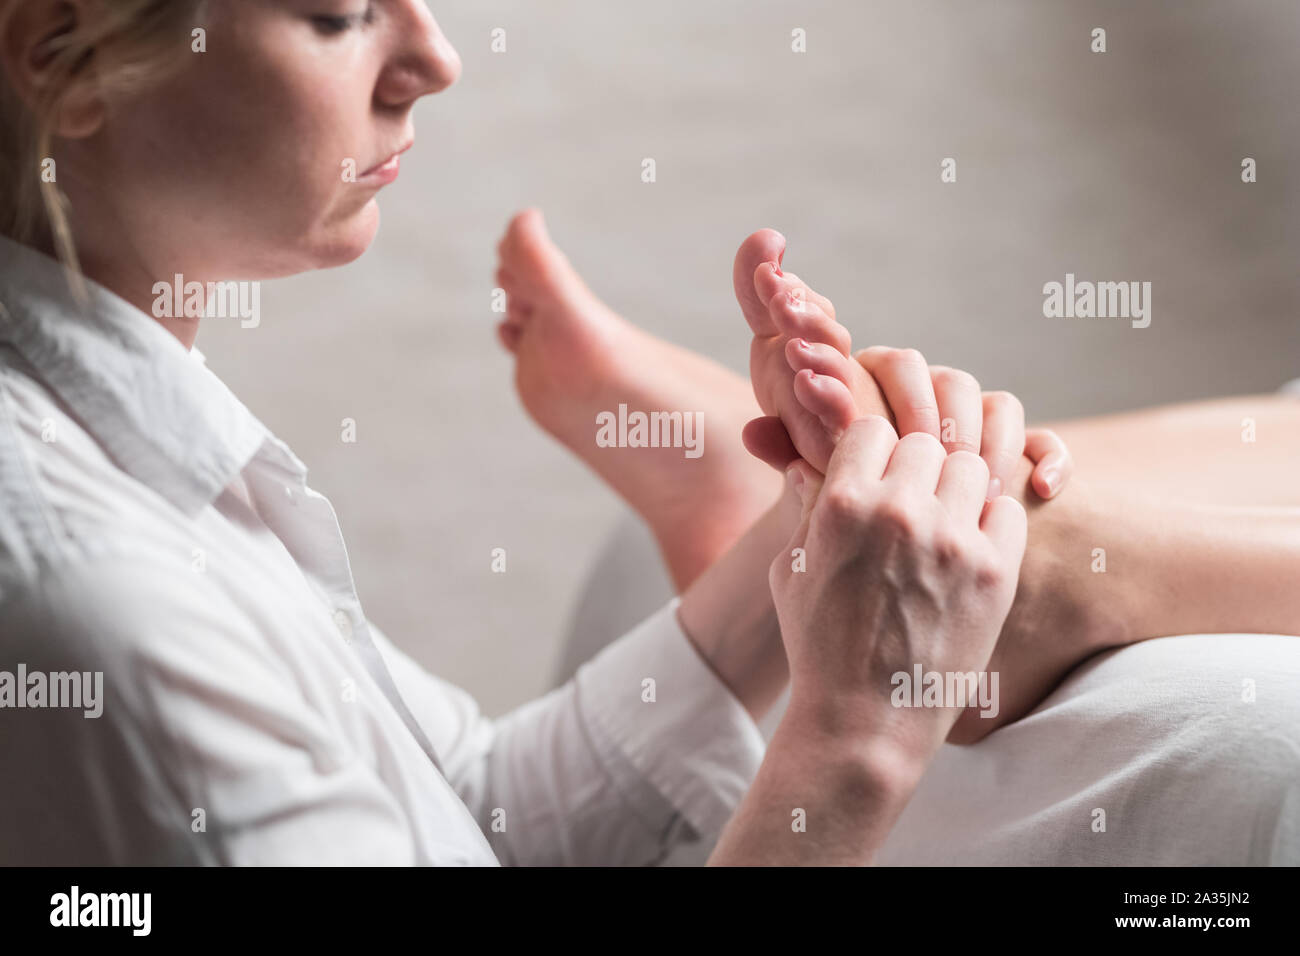 Professional female masseur giving reflexology massage to woman foot Stock Photo